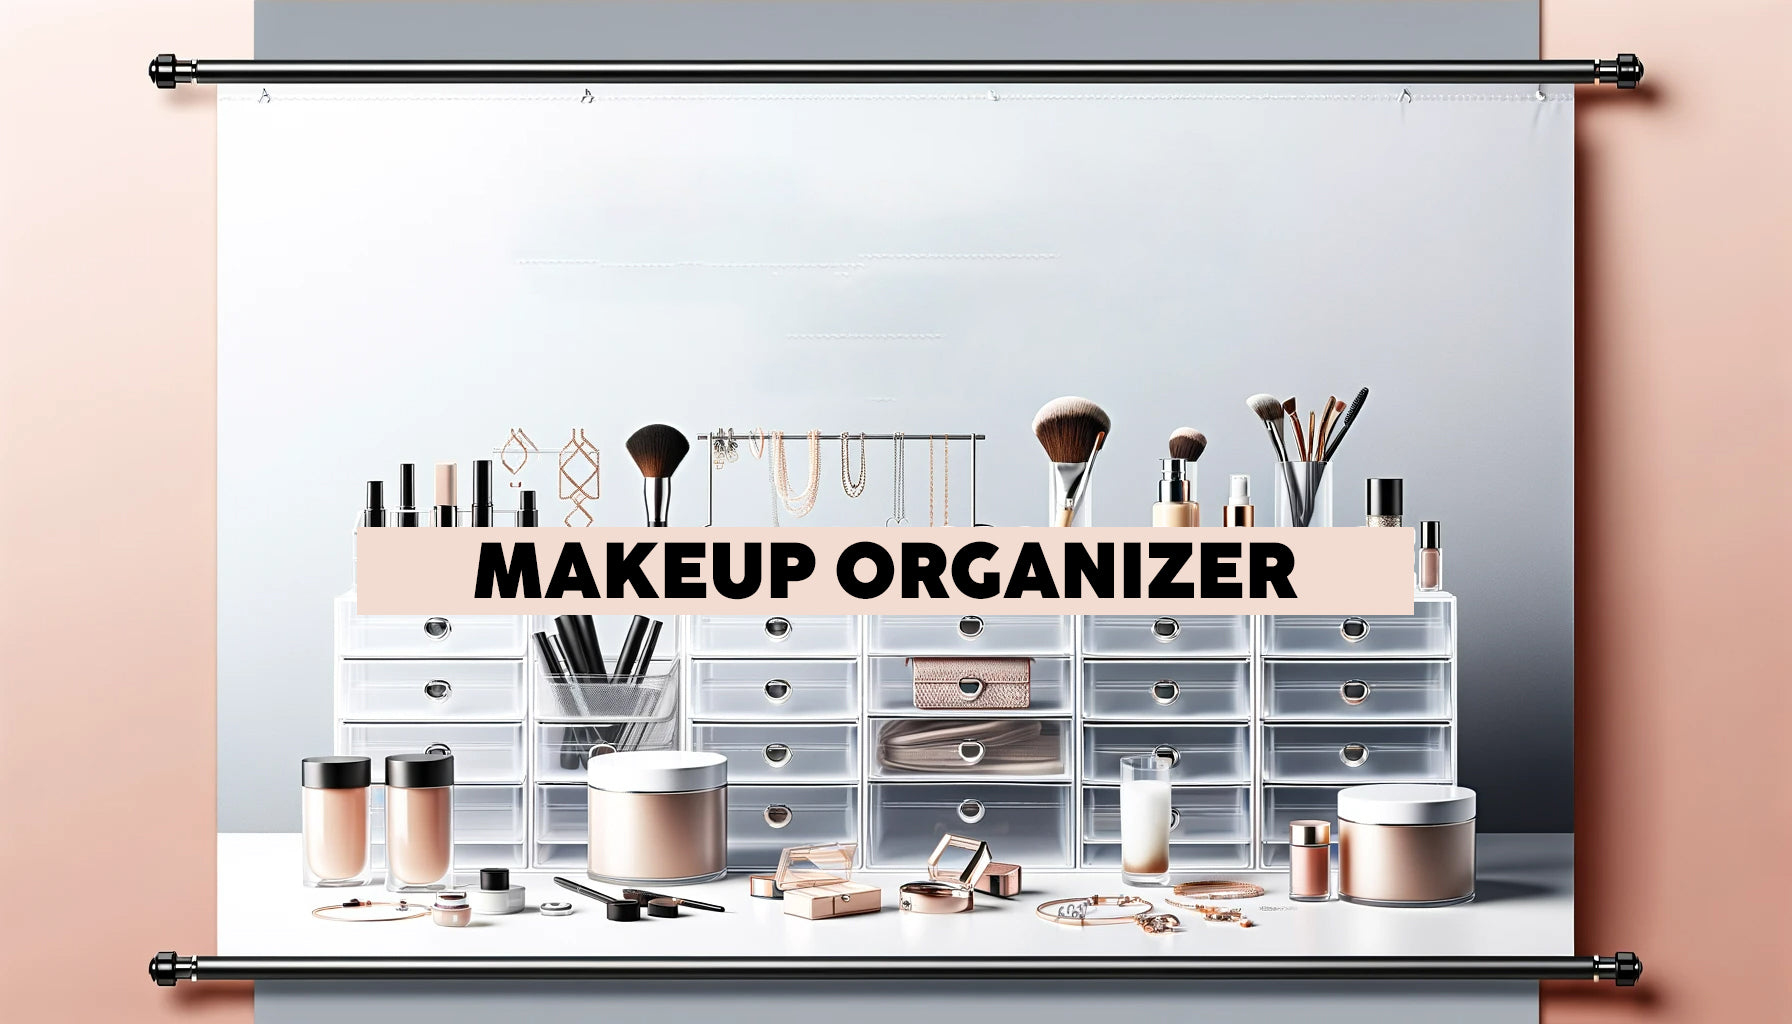 "Sleek &amp; Functional Cosmetic Storage - Organize Your Makeup Effortlessly"